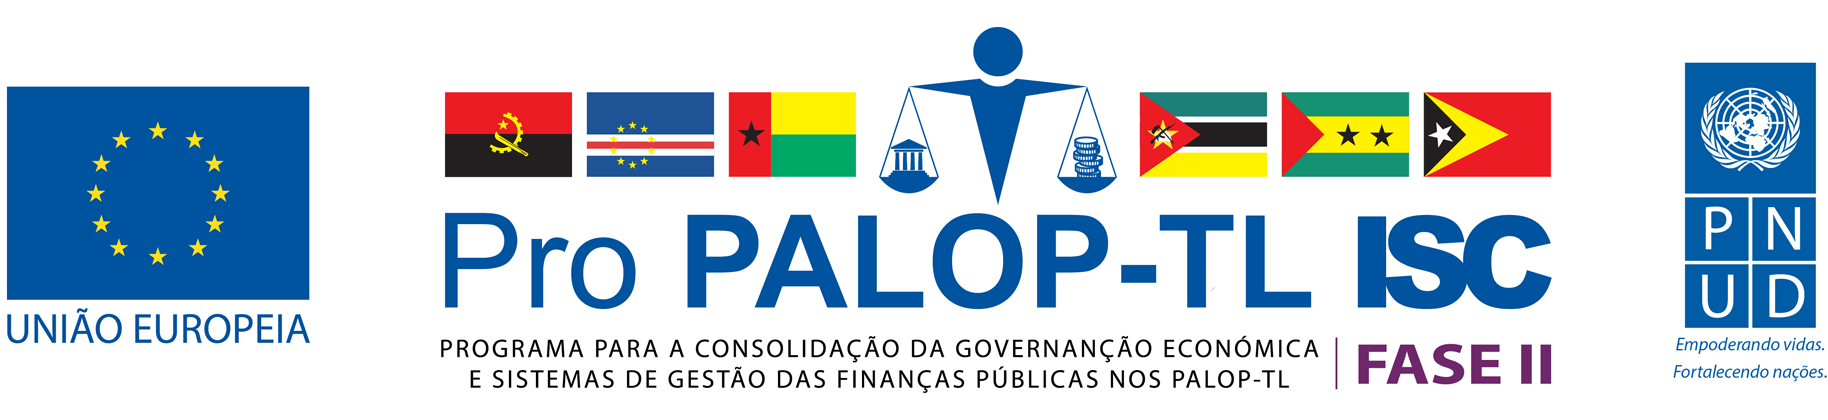 Logo Pro PALOP-TL ISC